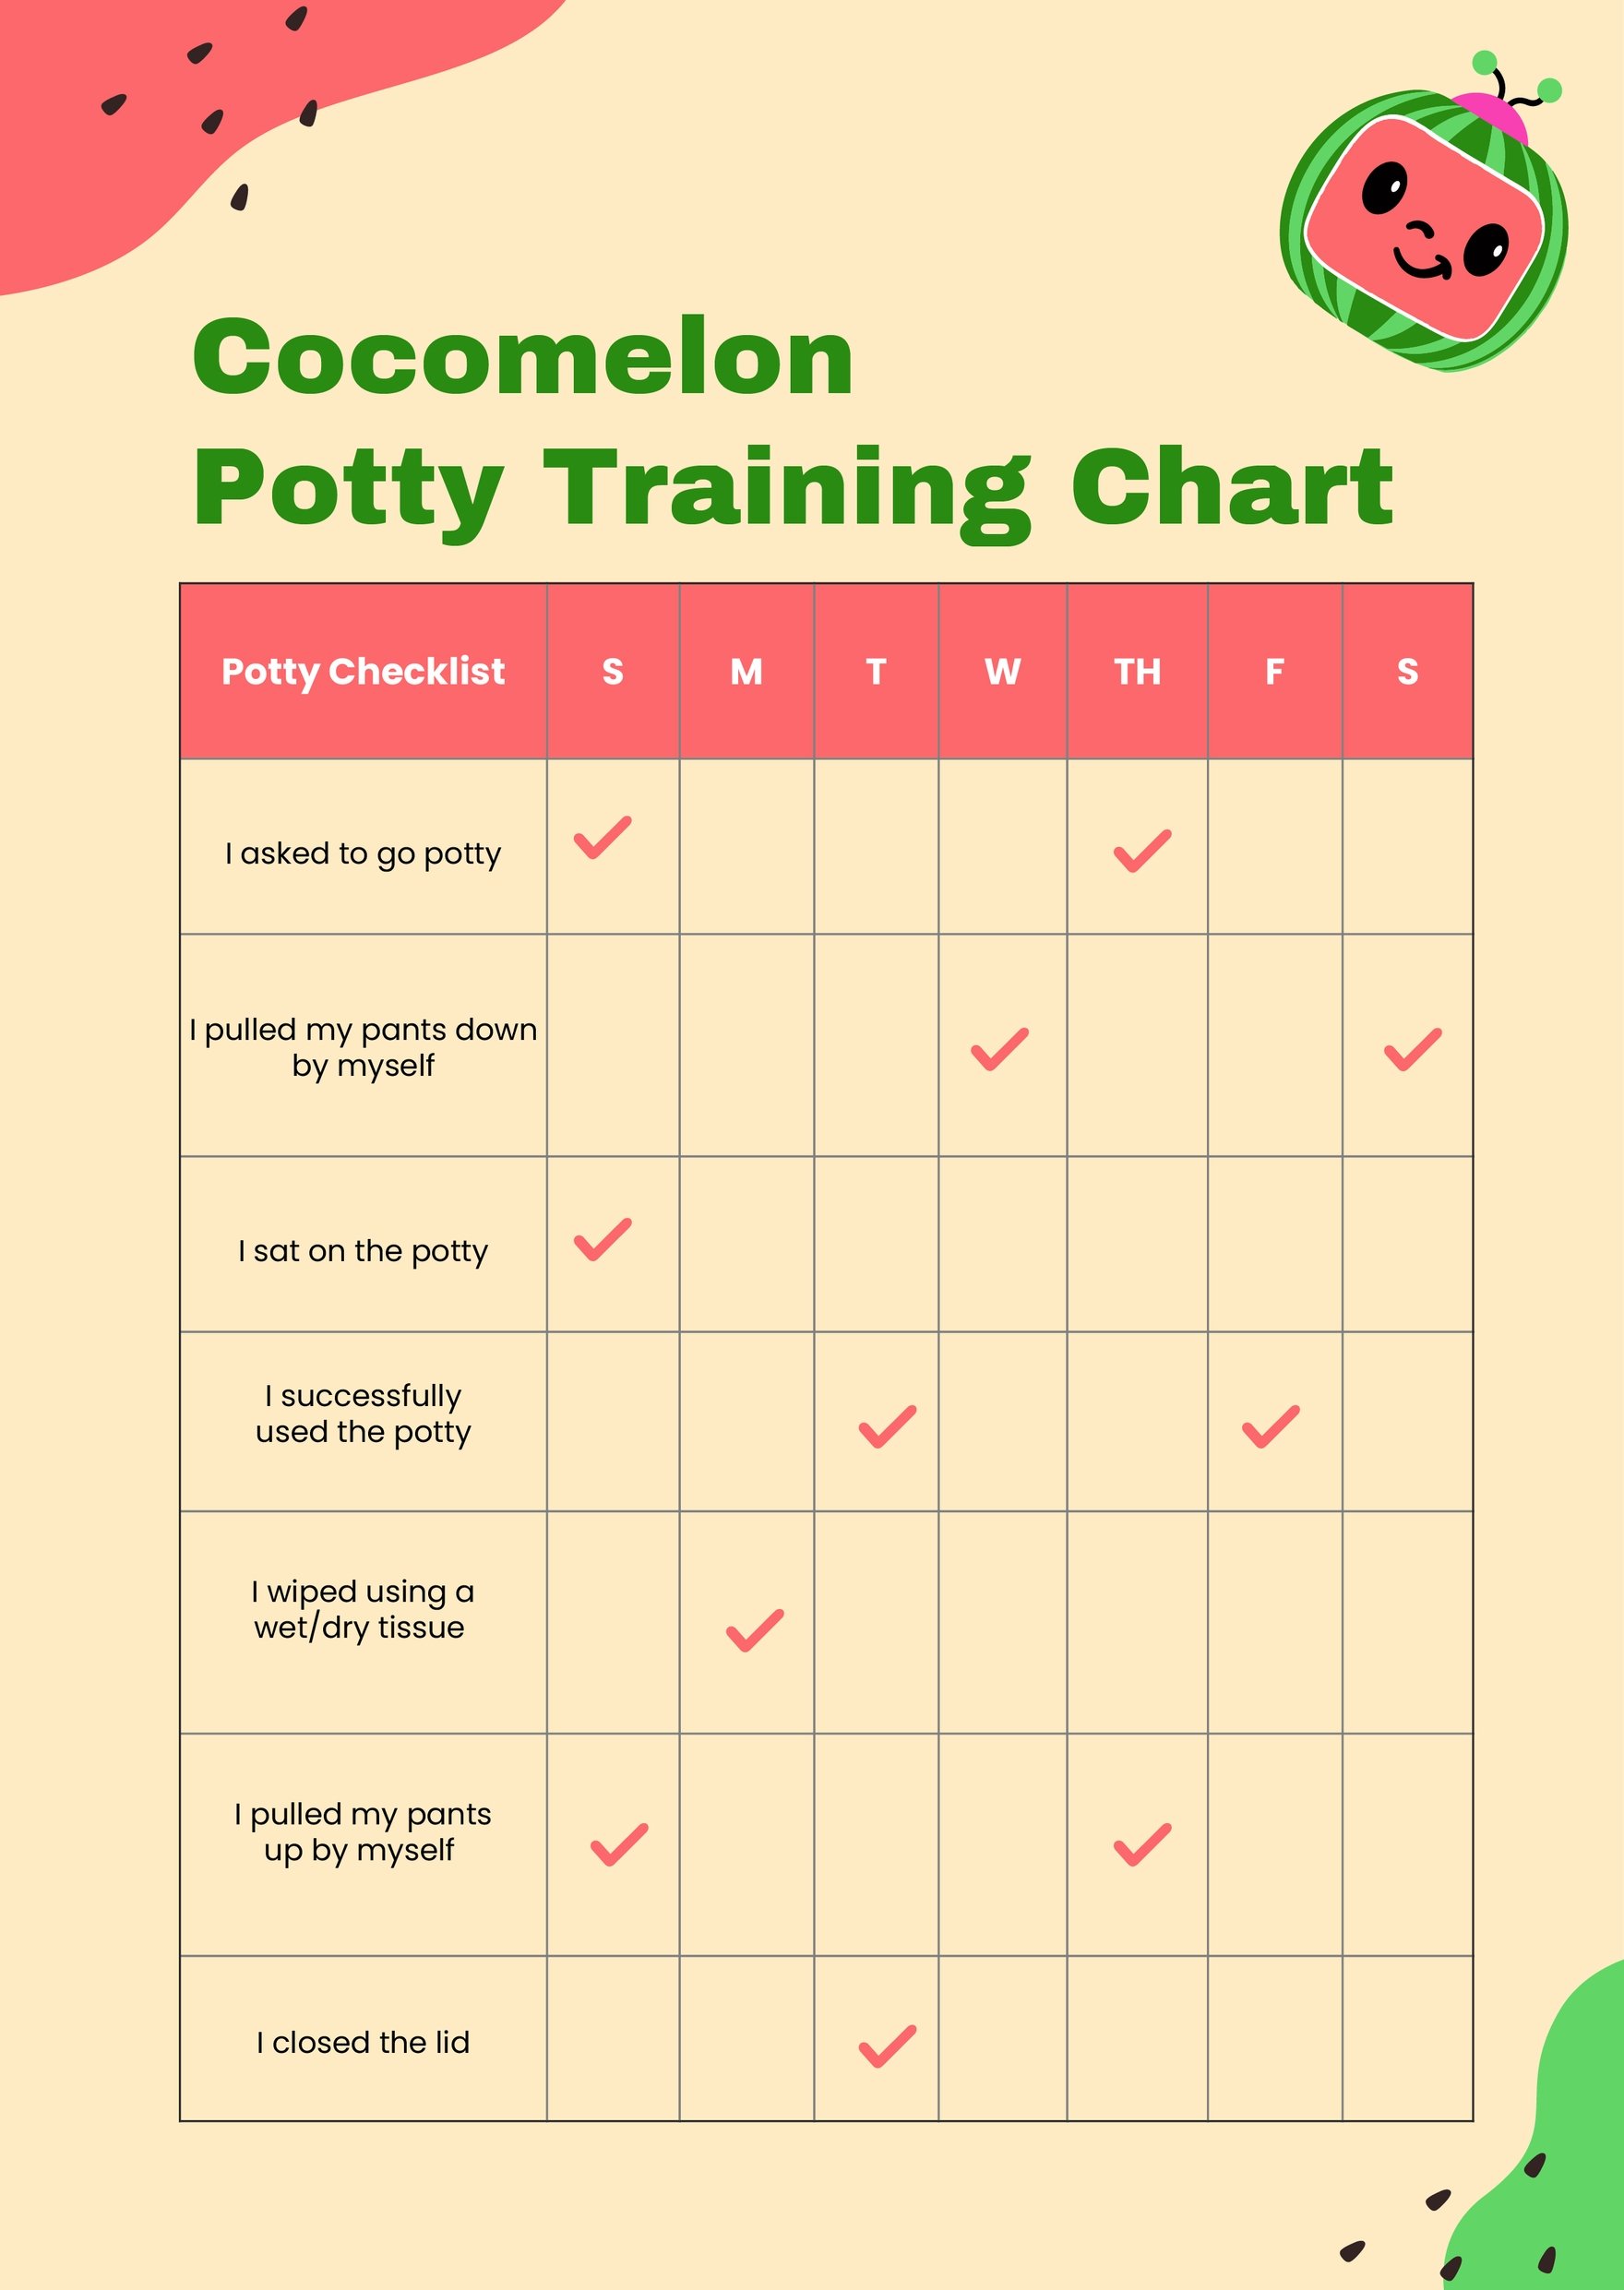 Cocomelon Potty Training Chart in PDF, Illustrator